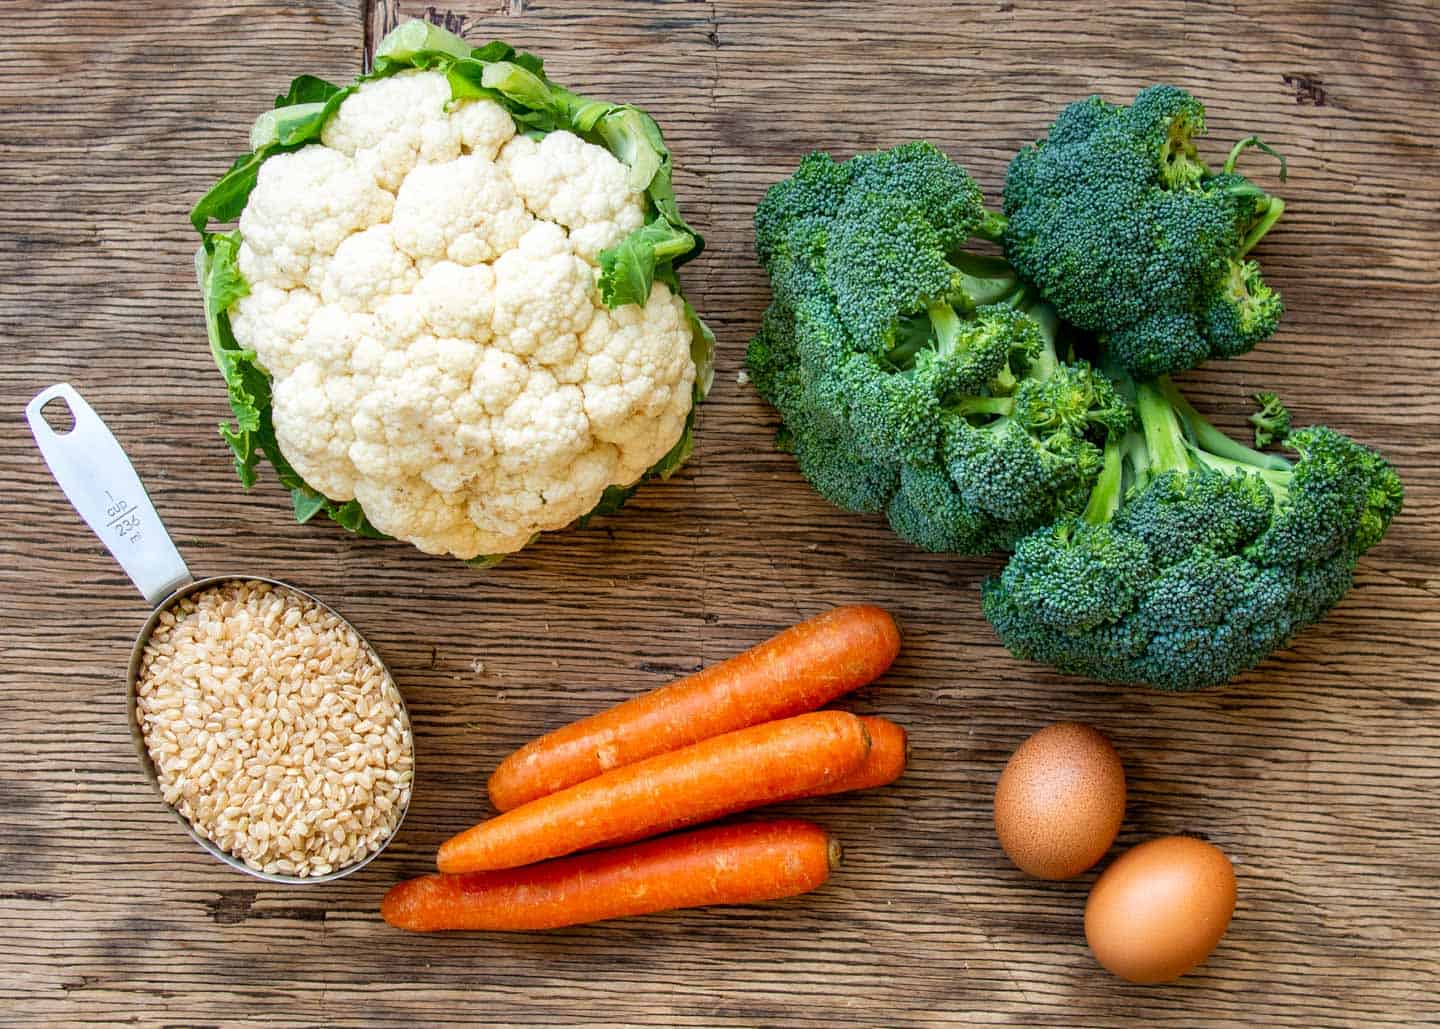 Ingredients for Gado Gado: brown rice, eggs, broccoli, cauliflower, carrots